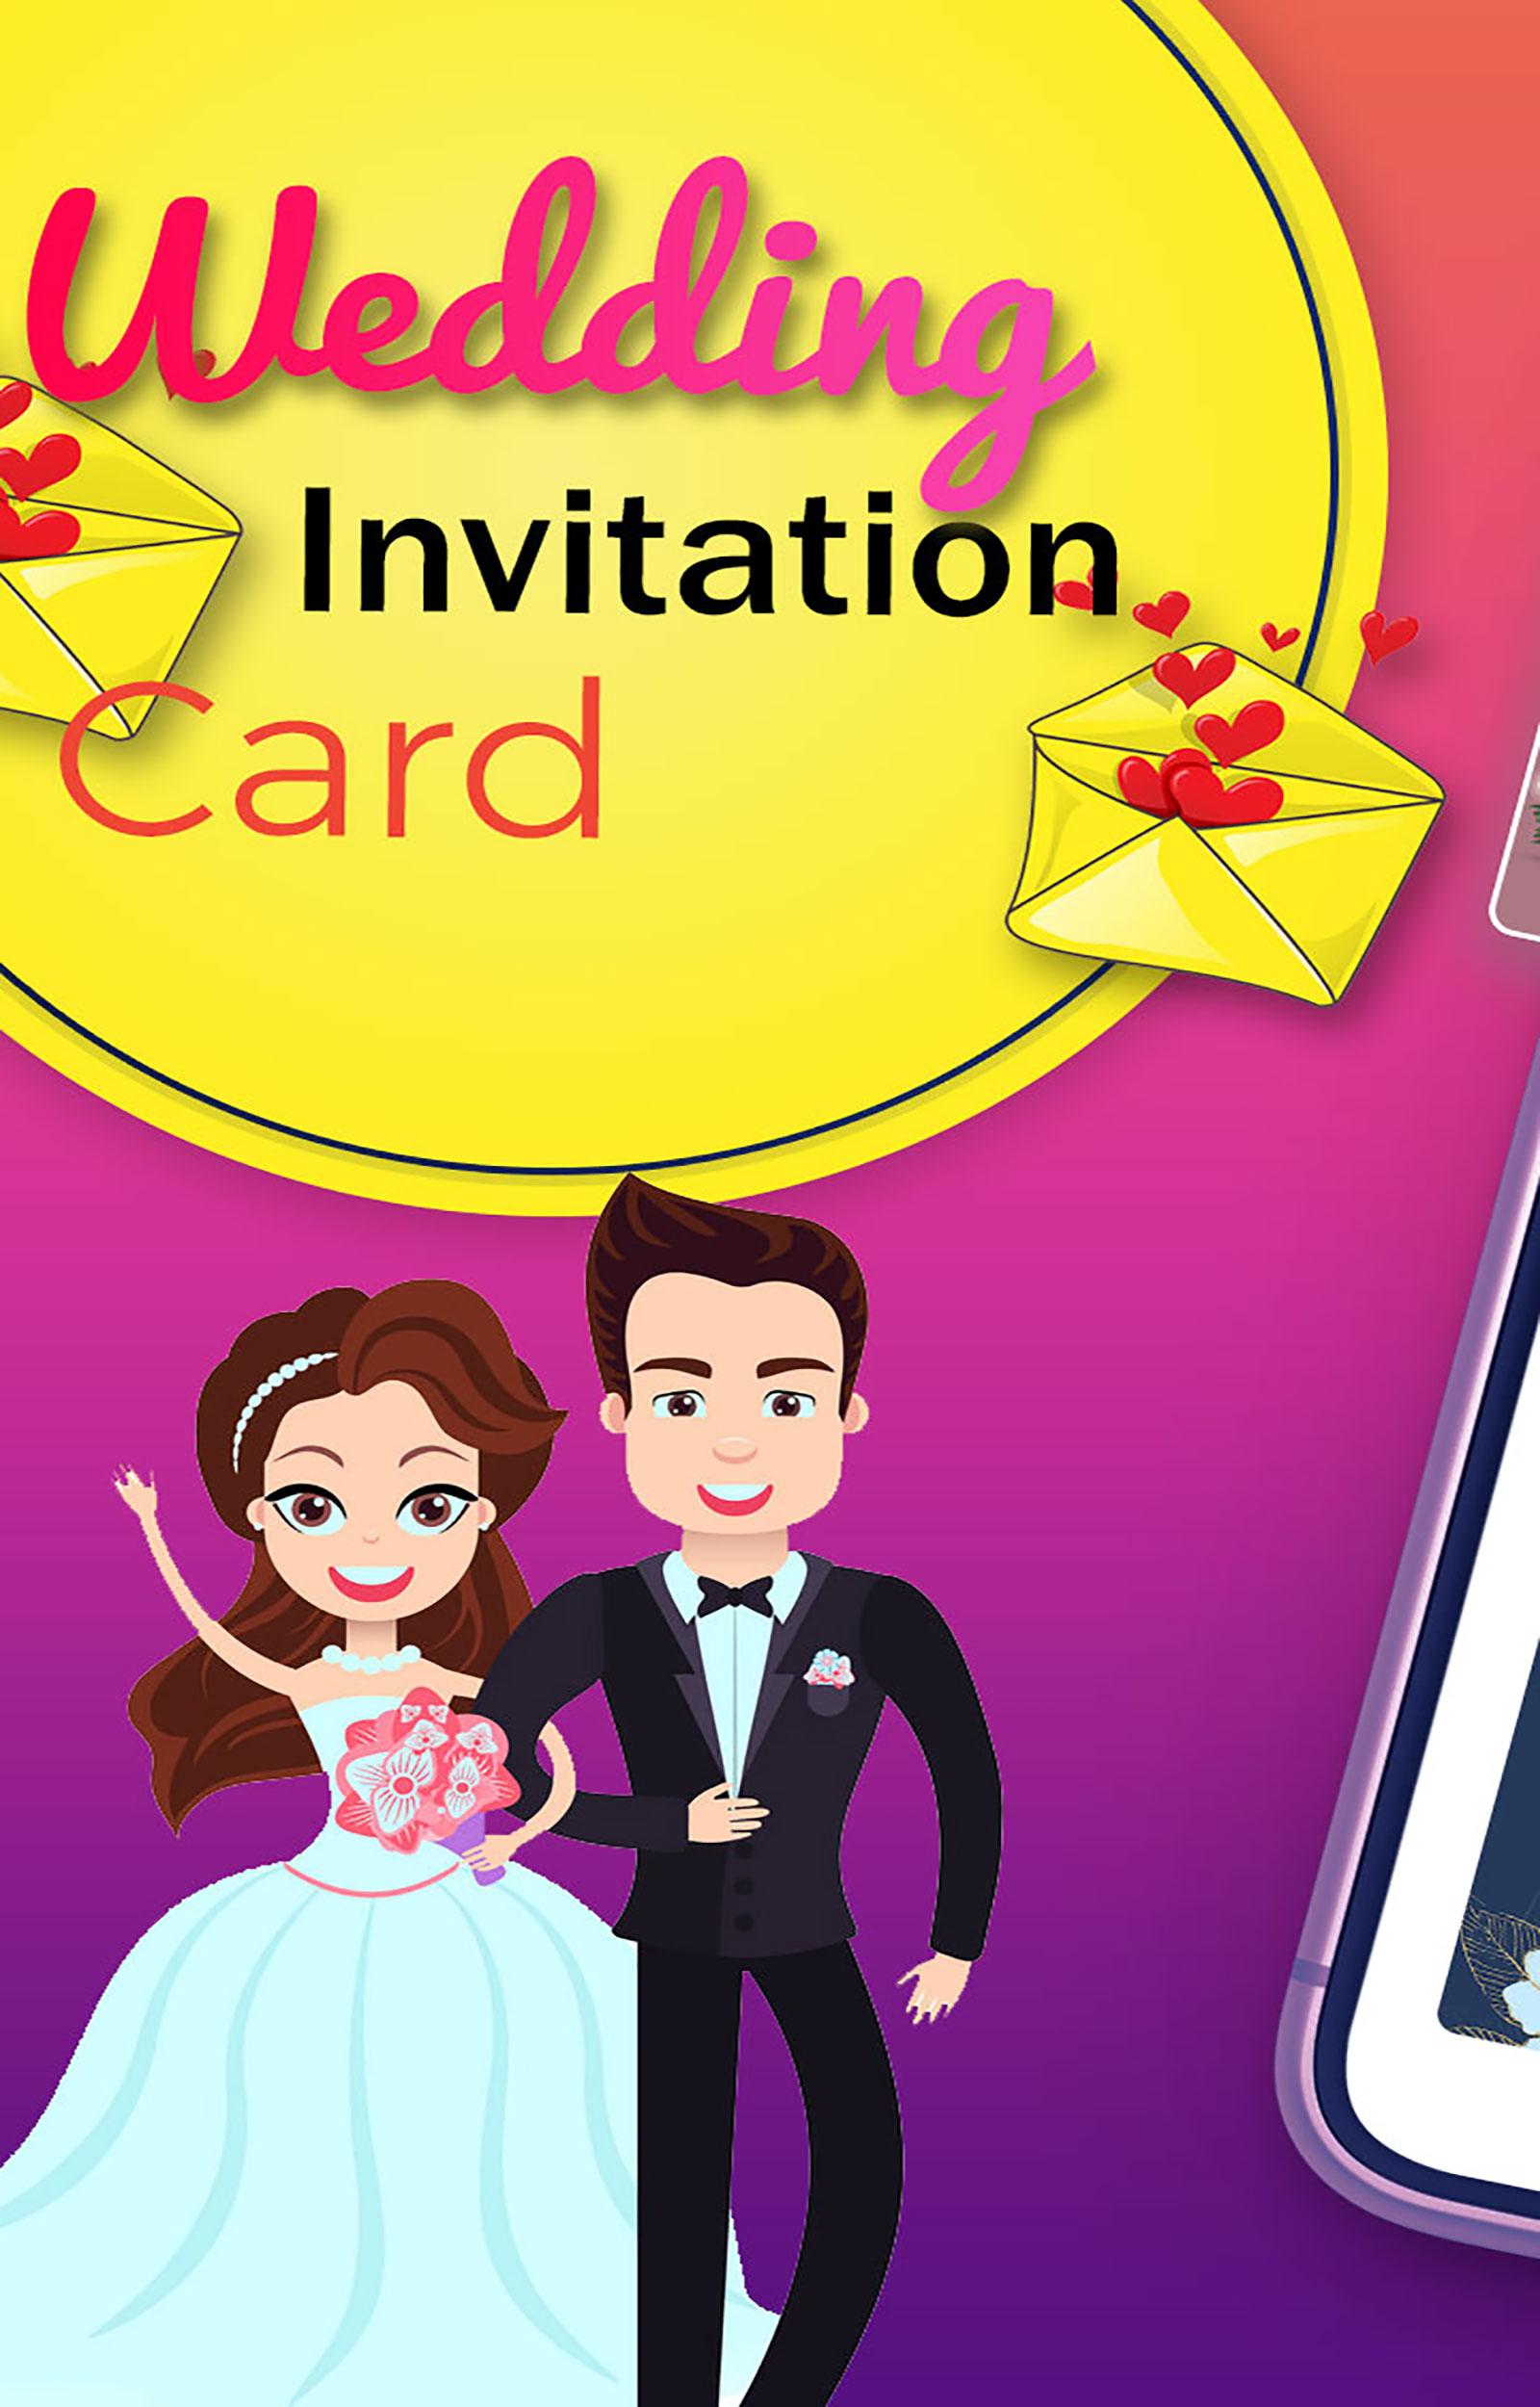 Wedding Invitation Card Maker 1.1 Screenshot 13